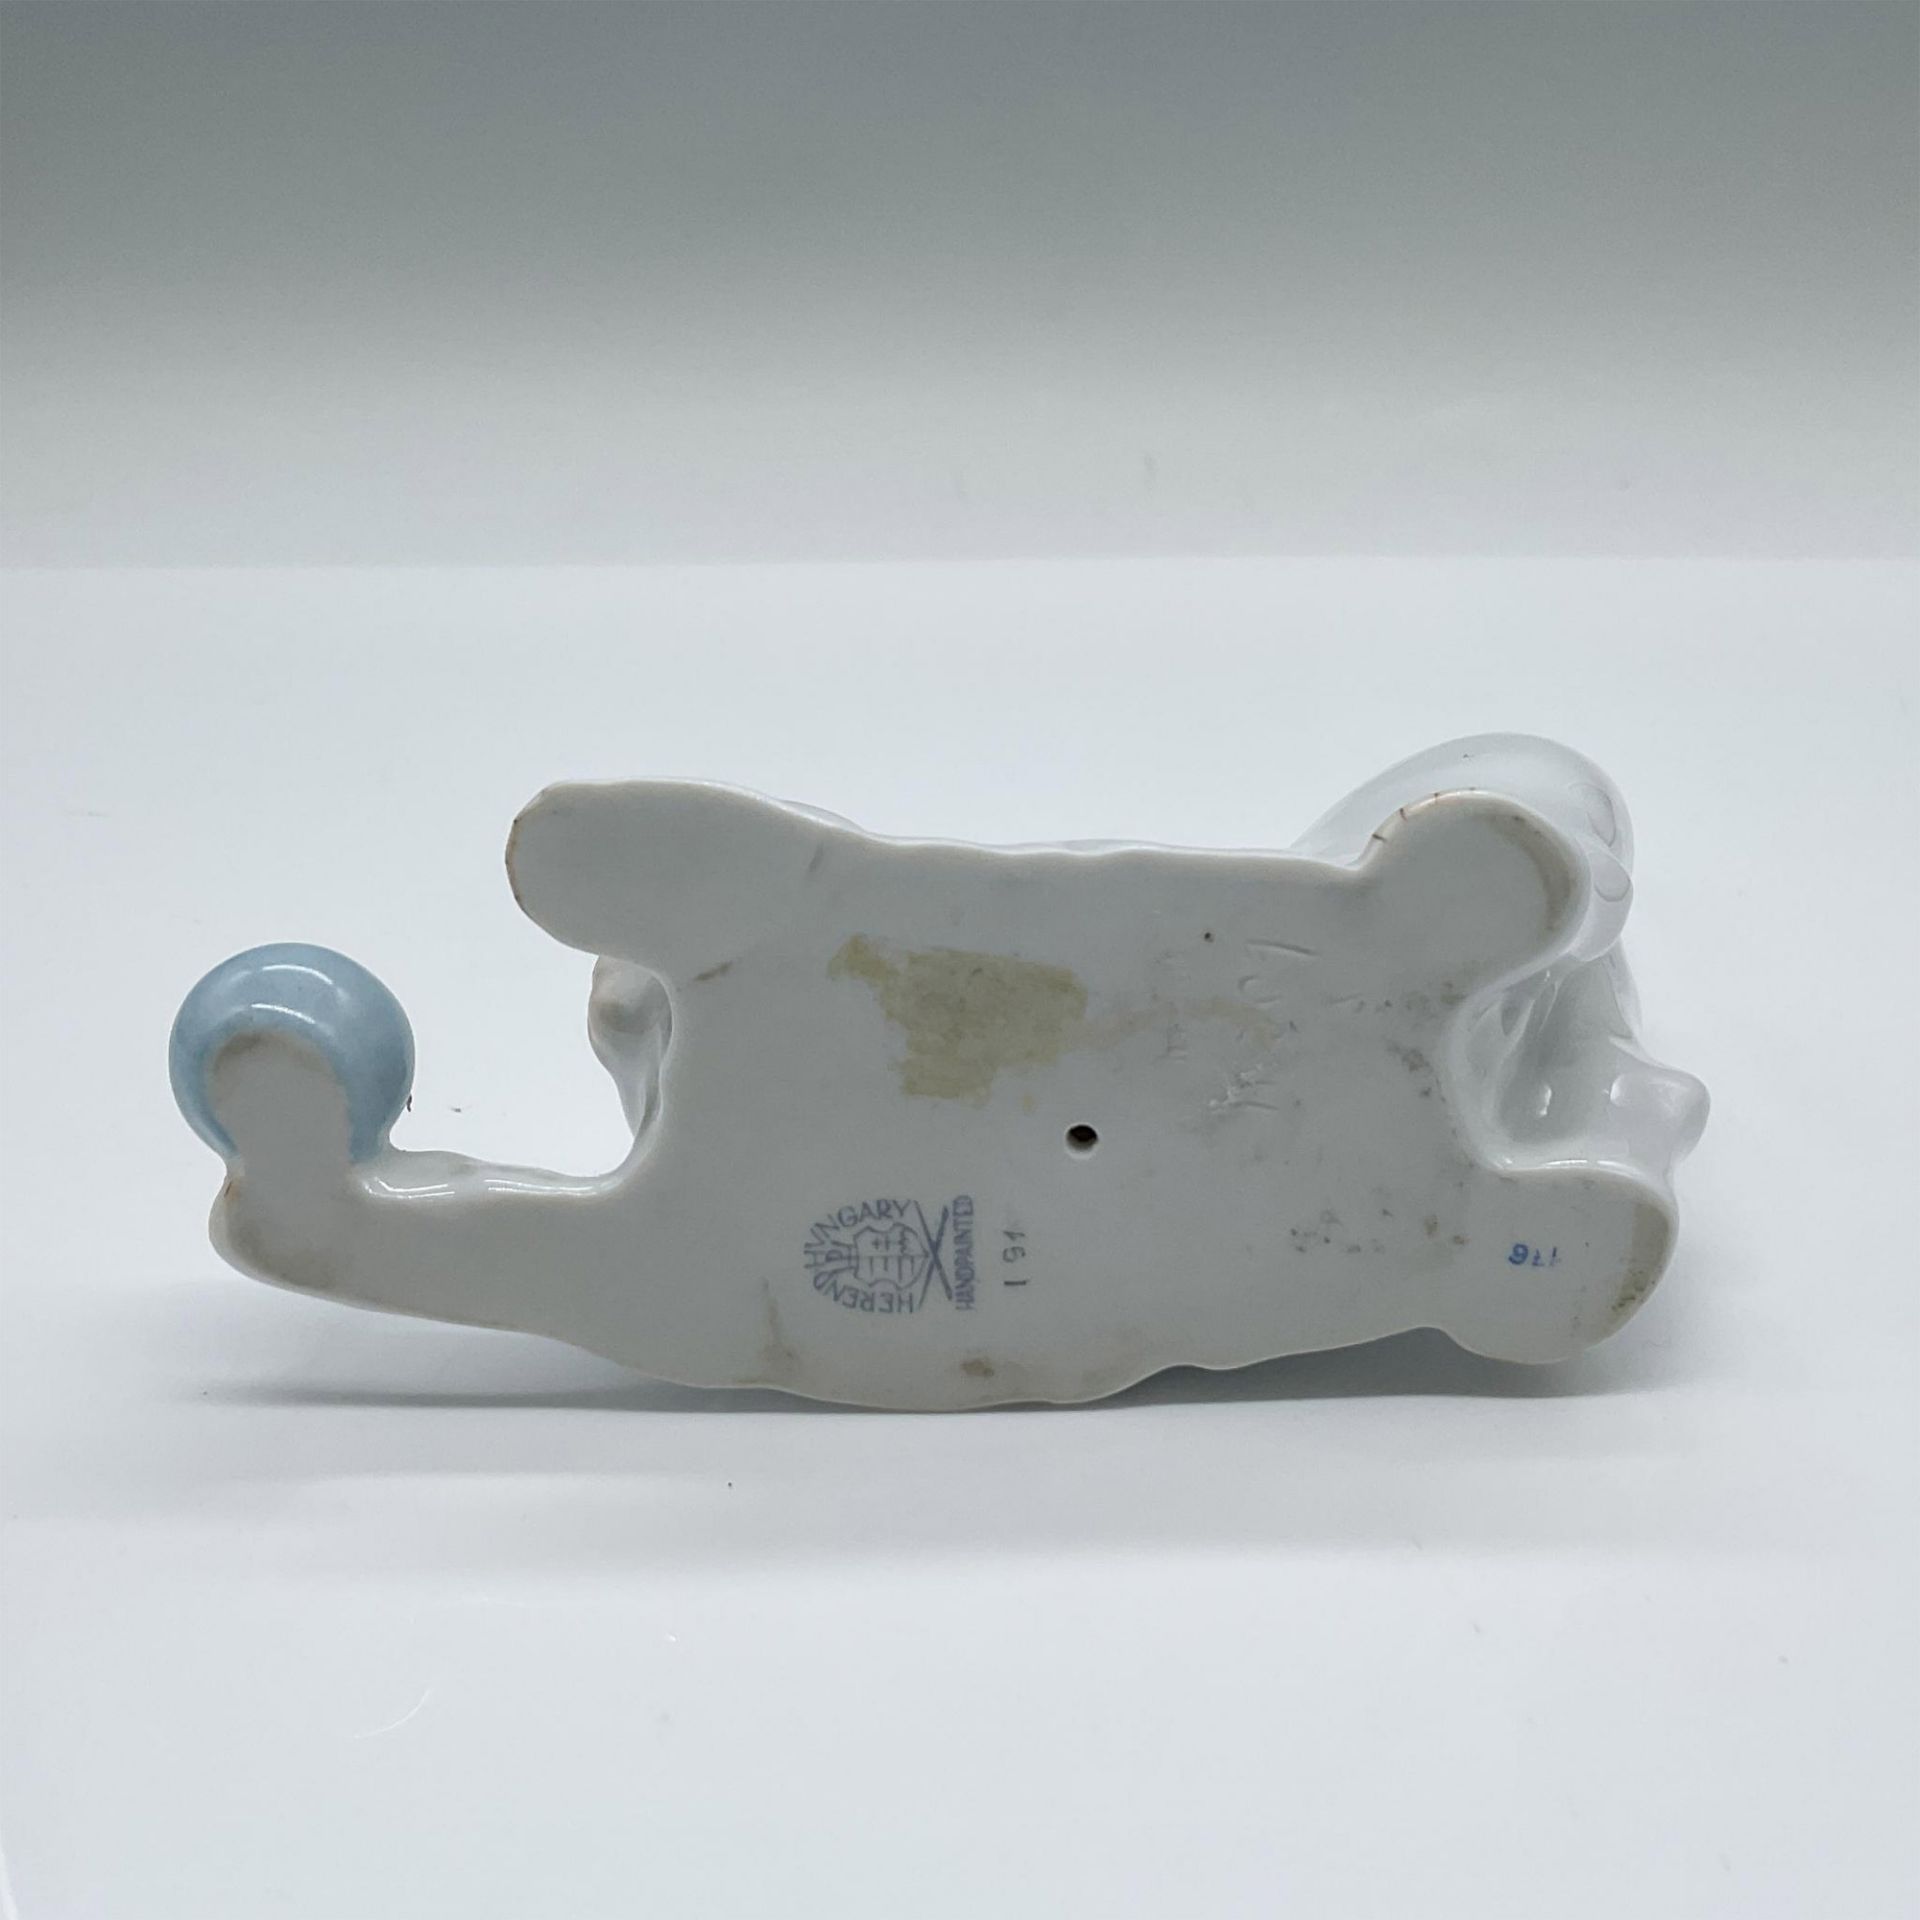 Herend Porcelain Cat Figurine - Image 3 of 3